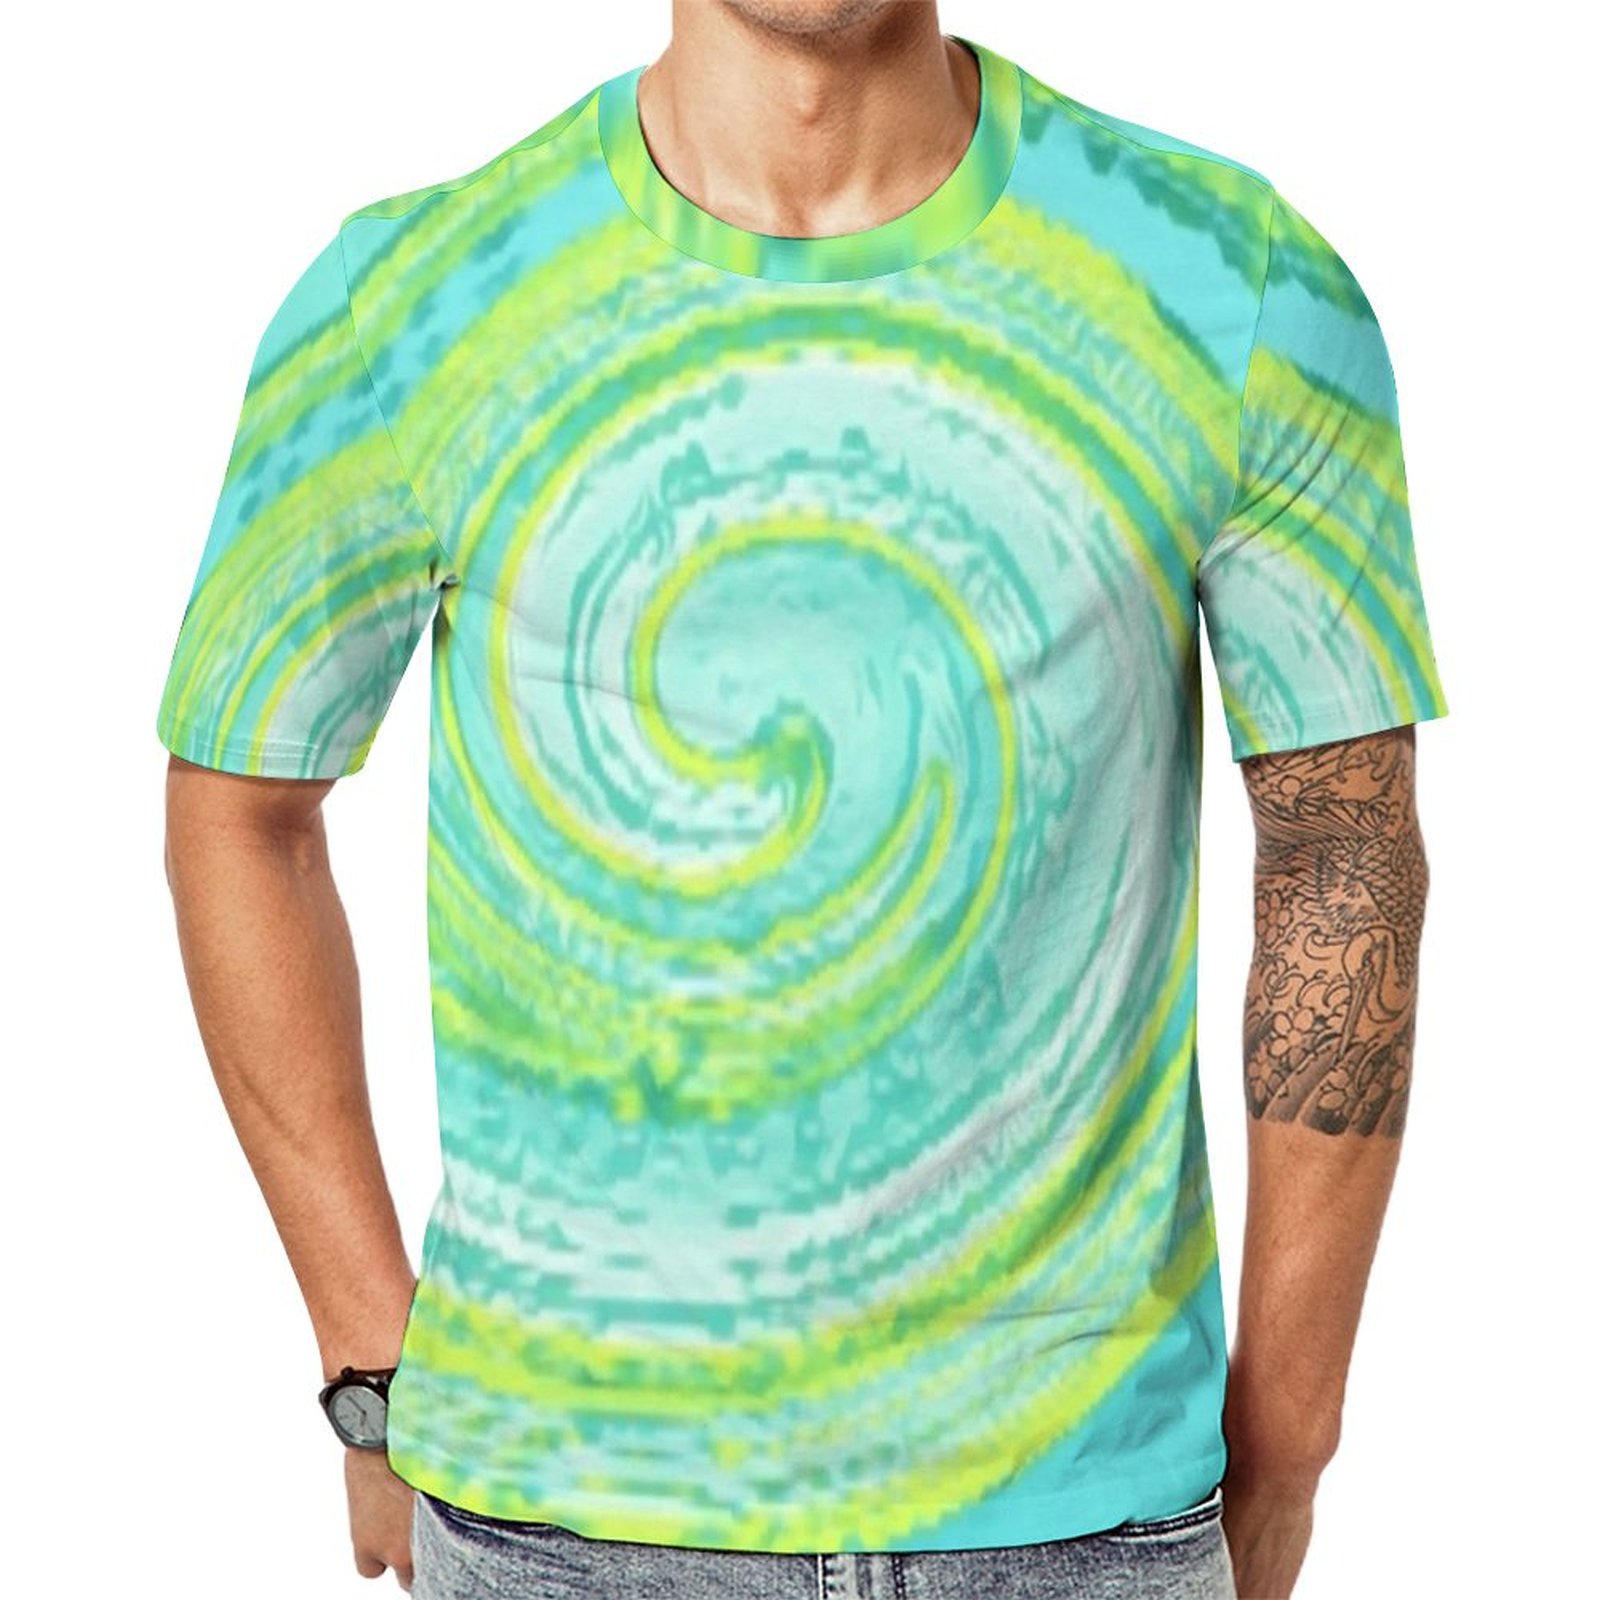 Hip Lime Green Aqua Turquoise Art Circle Short Sleeve Print Unisex Tshirt Summer Casual Tees for Men and Women Coolcoshirts